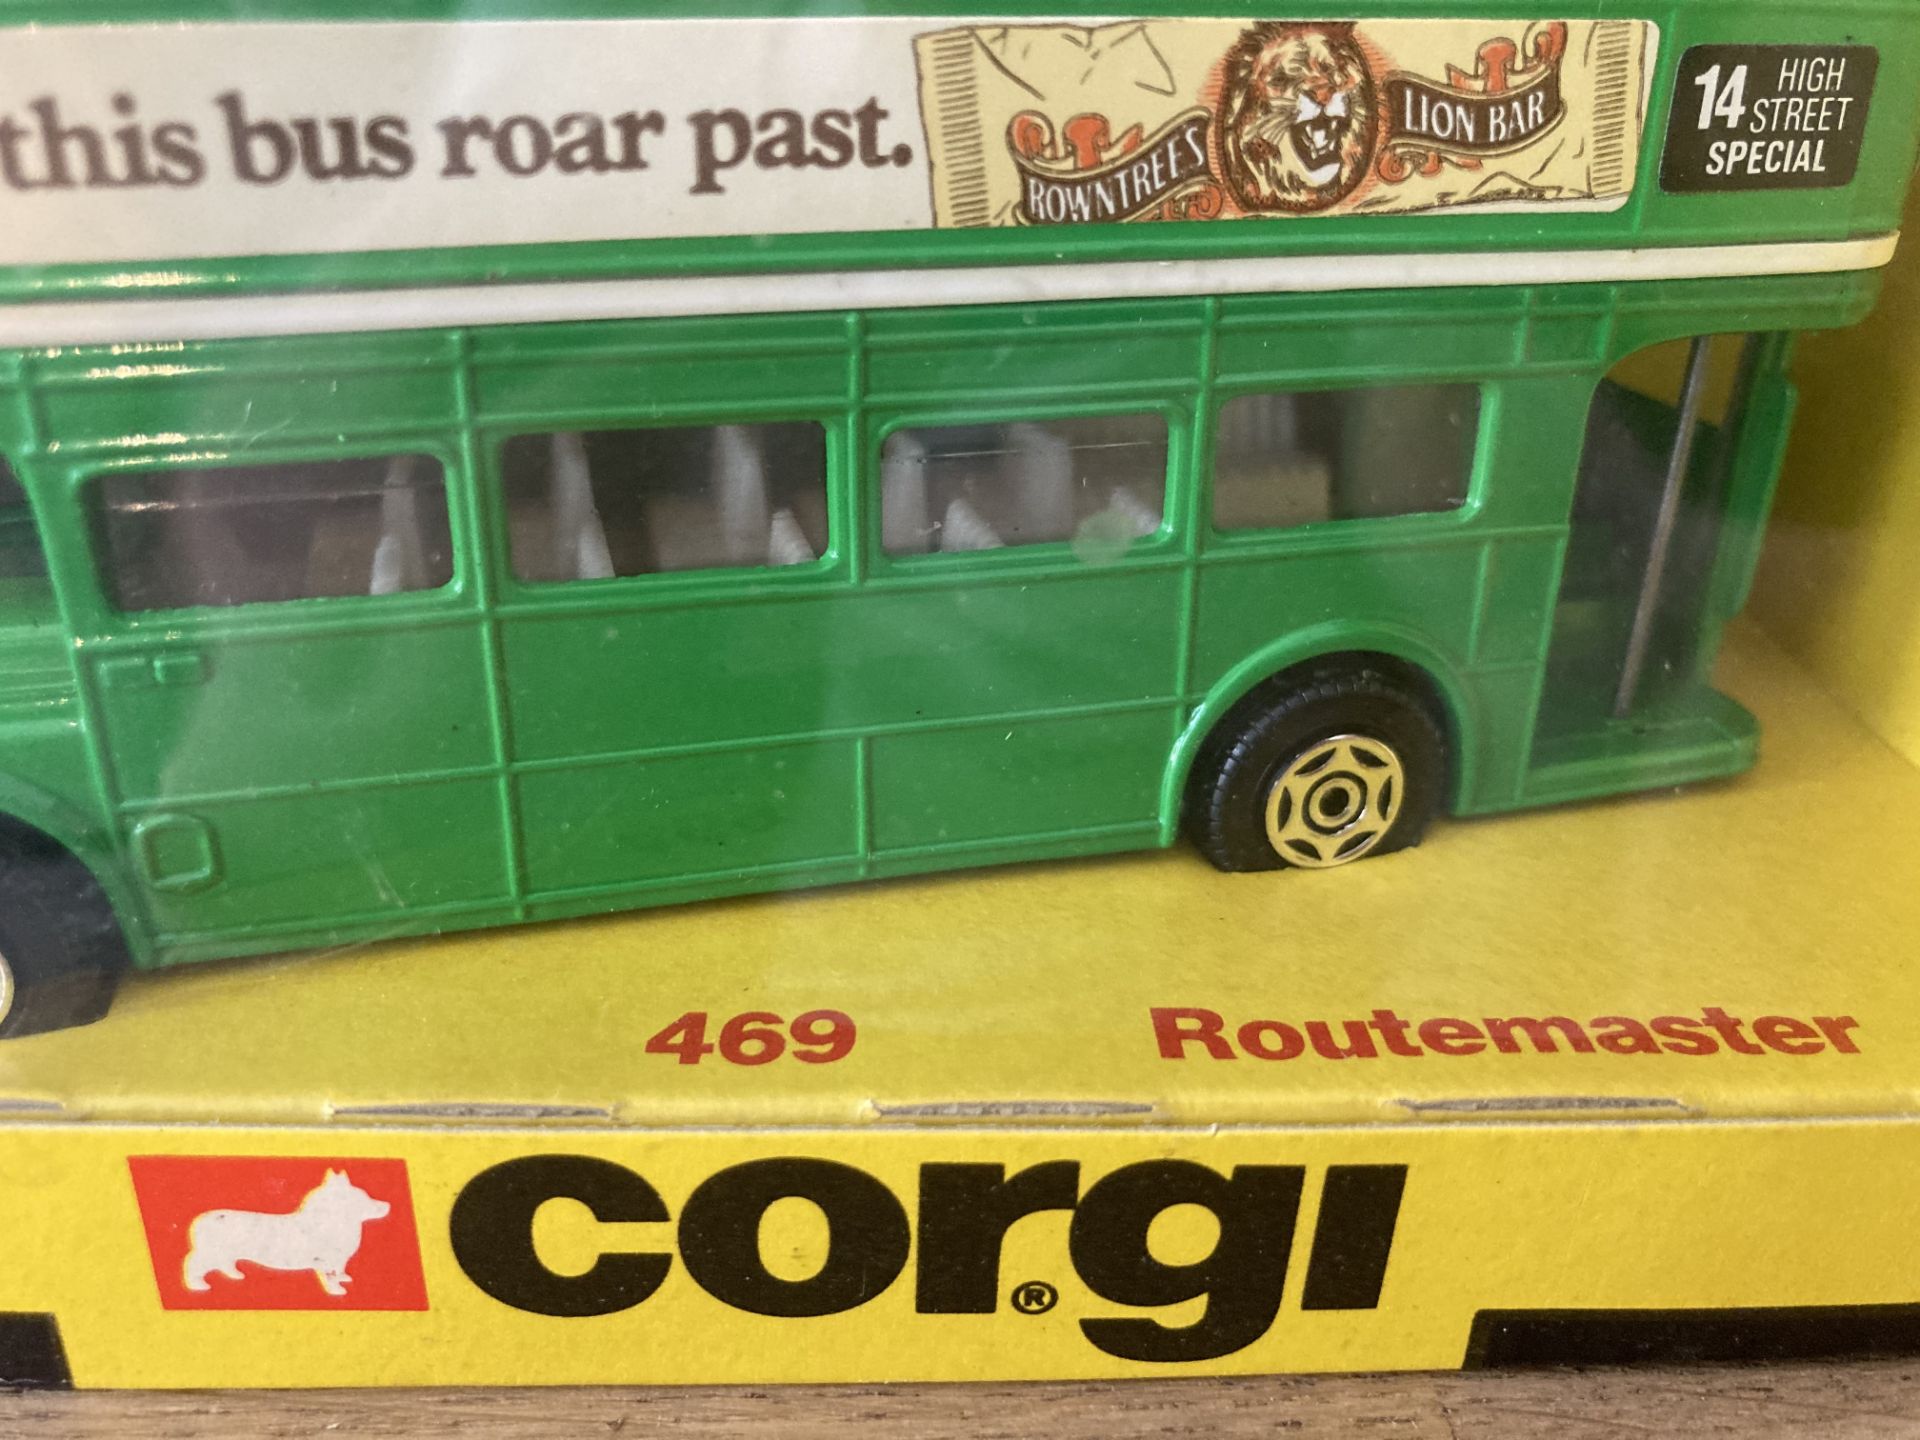 Corgi London Transport, Green Watch This Bus Roar Past Routemaster - 469 - Image 3 of 4